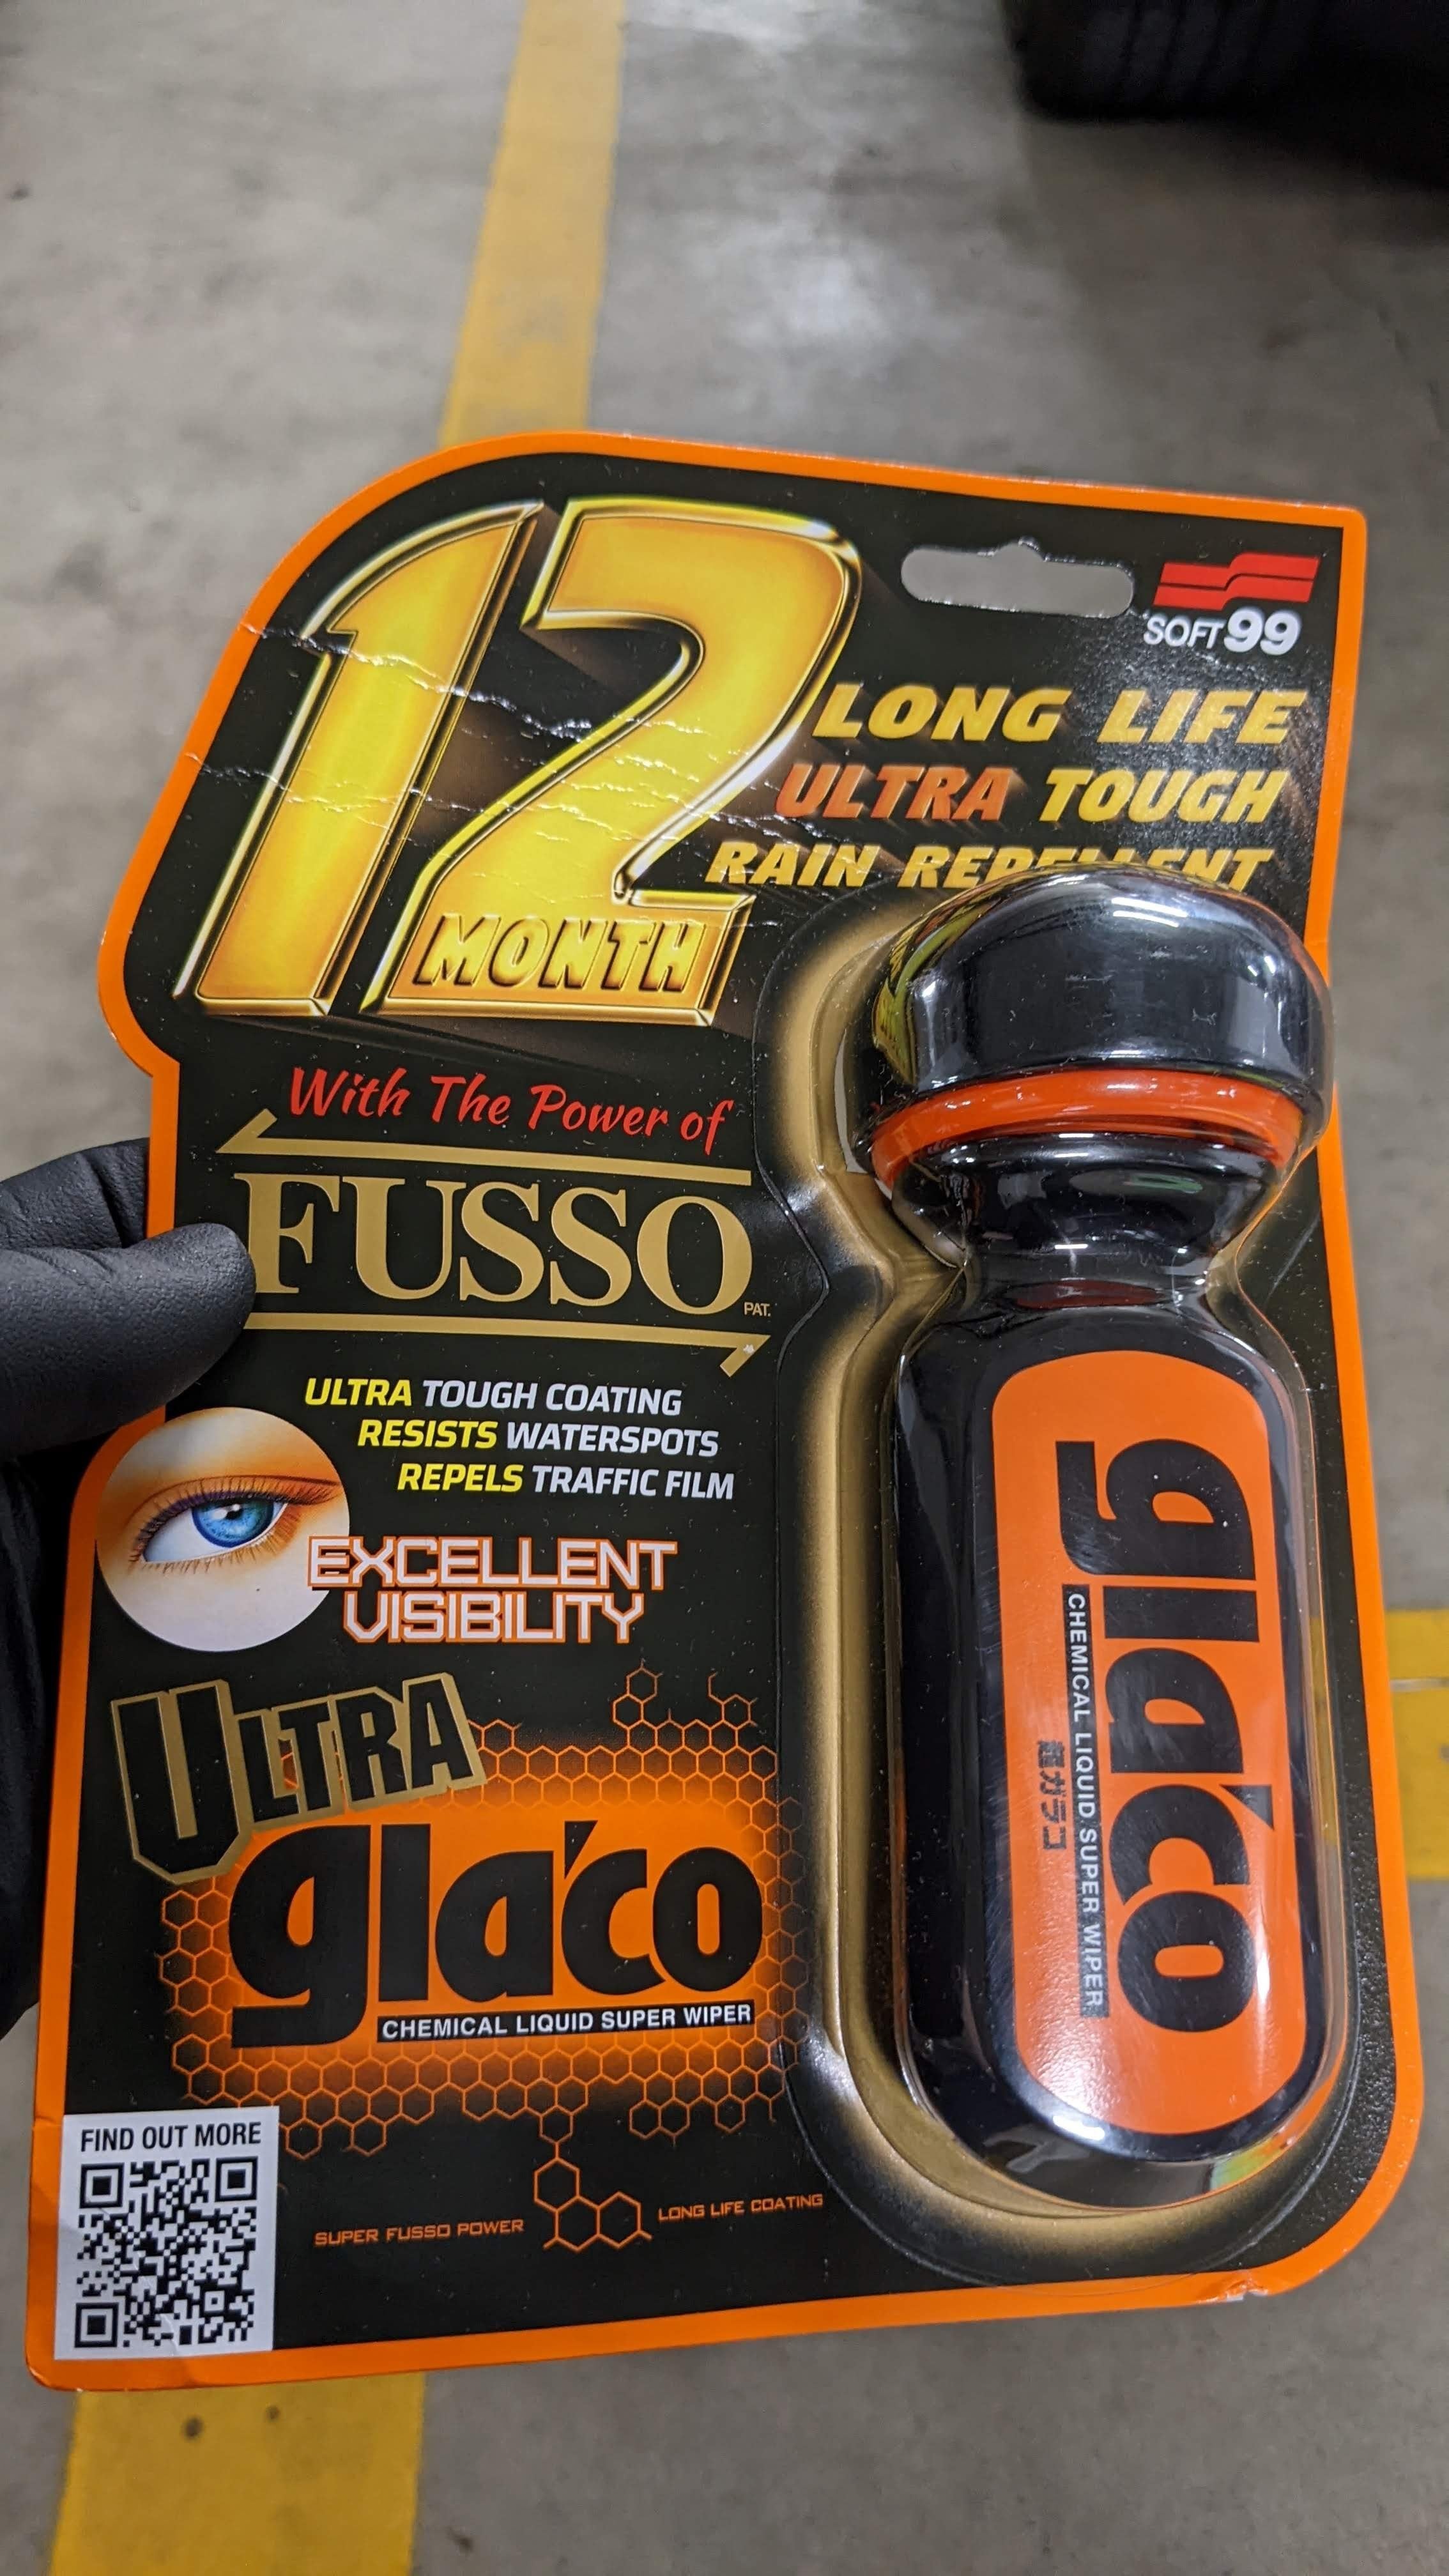 SOFT99 - Ultra Glaco Fusso Windshield Coating